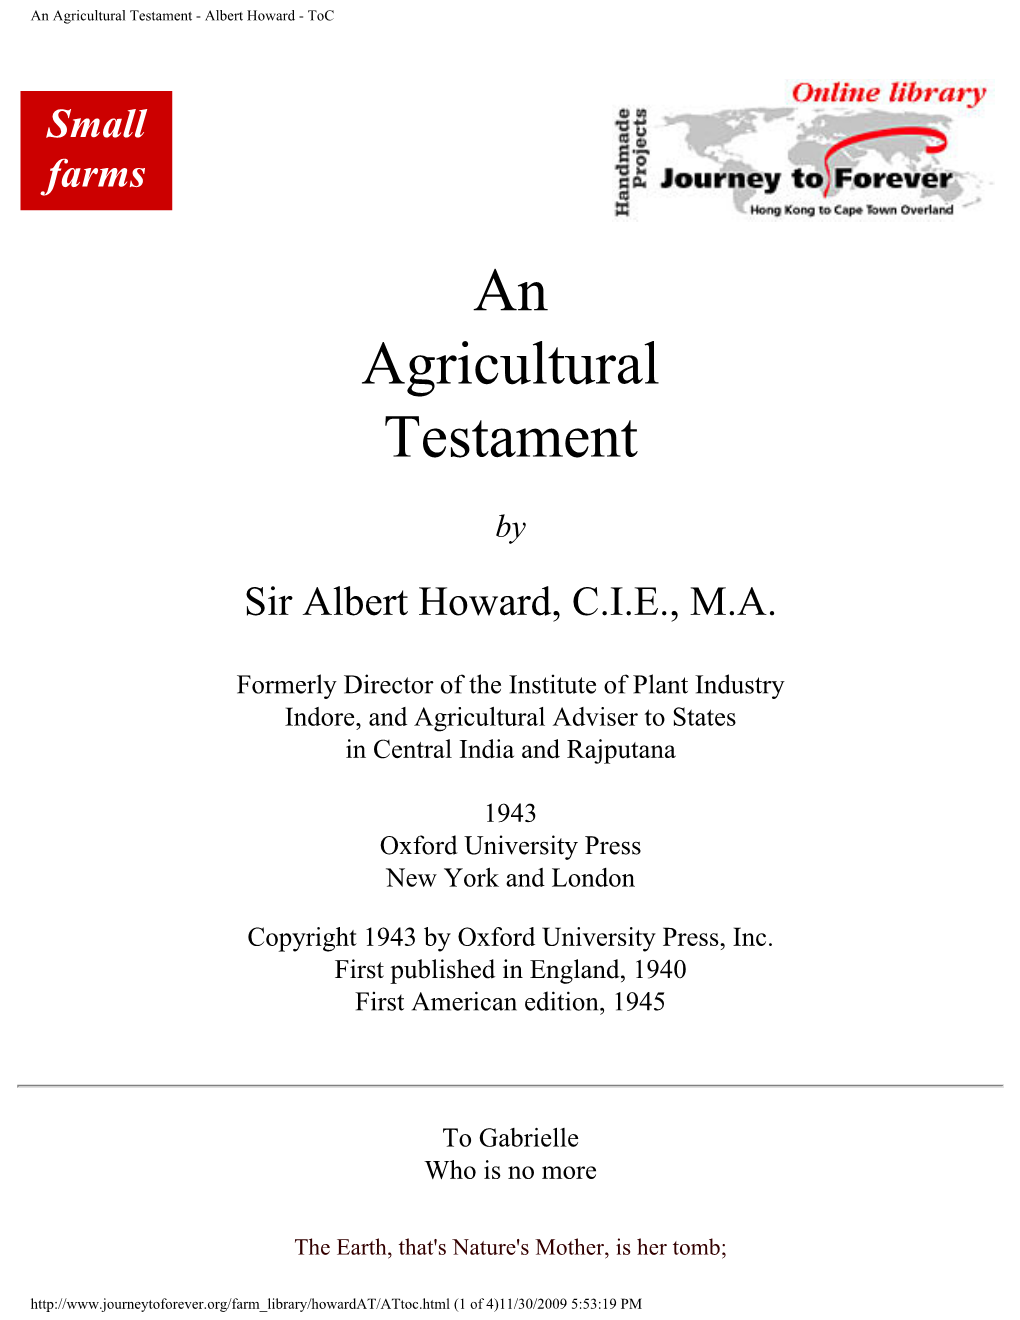 An Agricultural Testament by Sir Albert Howard